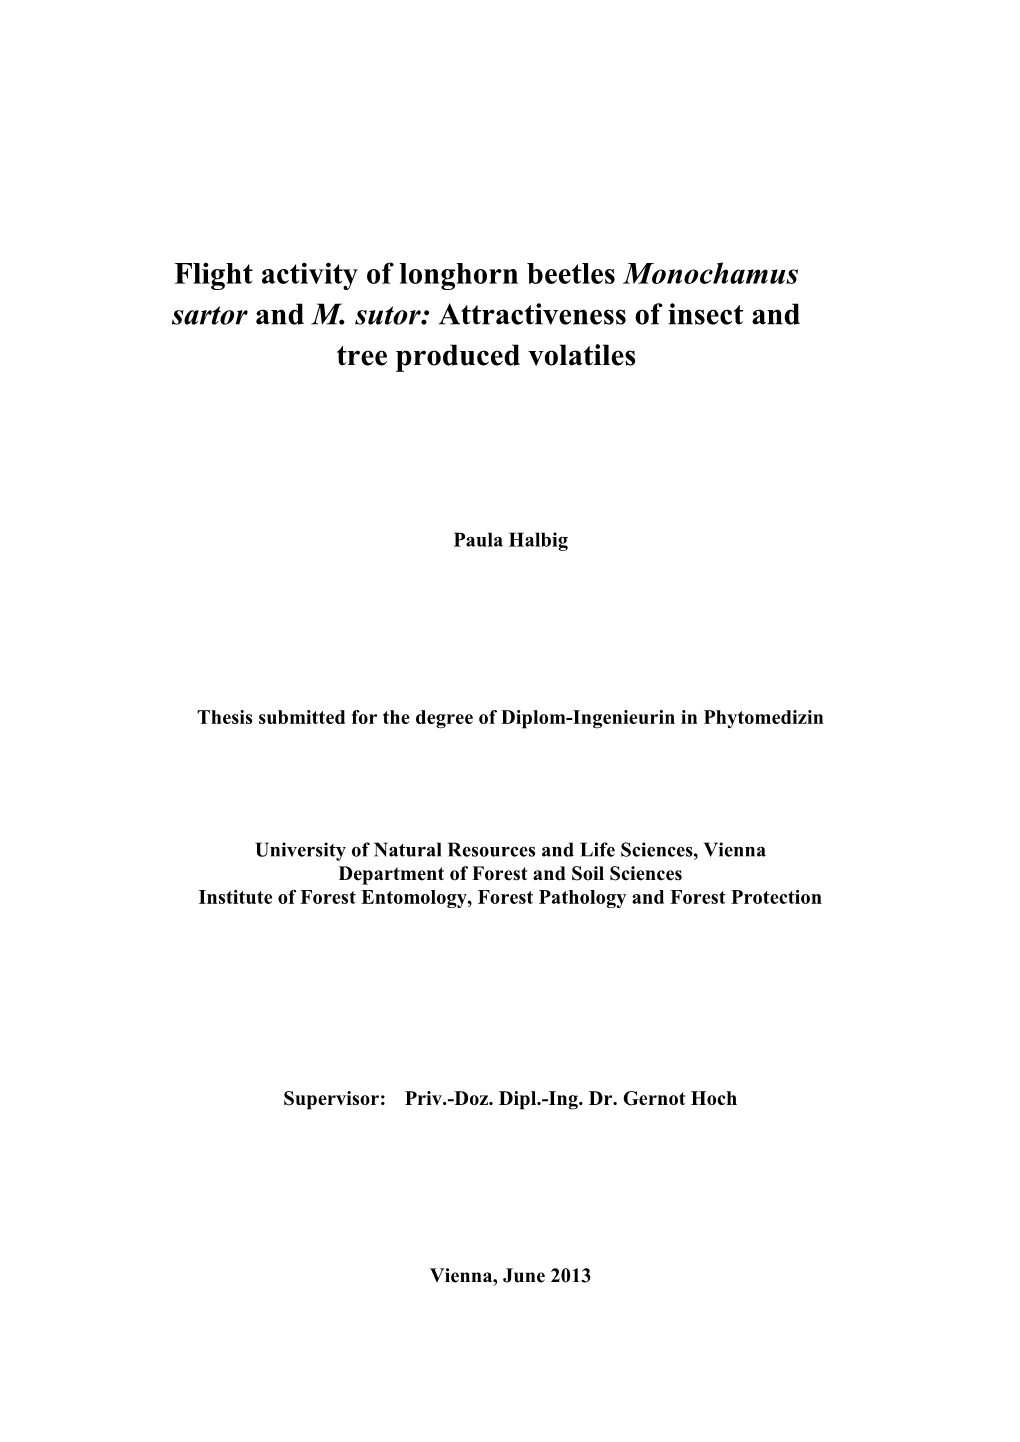 Flight Activity of the Longhorn Beetles Monochamus Sartor and M. Sutor